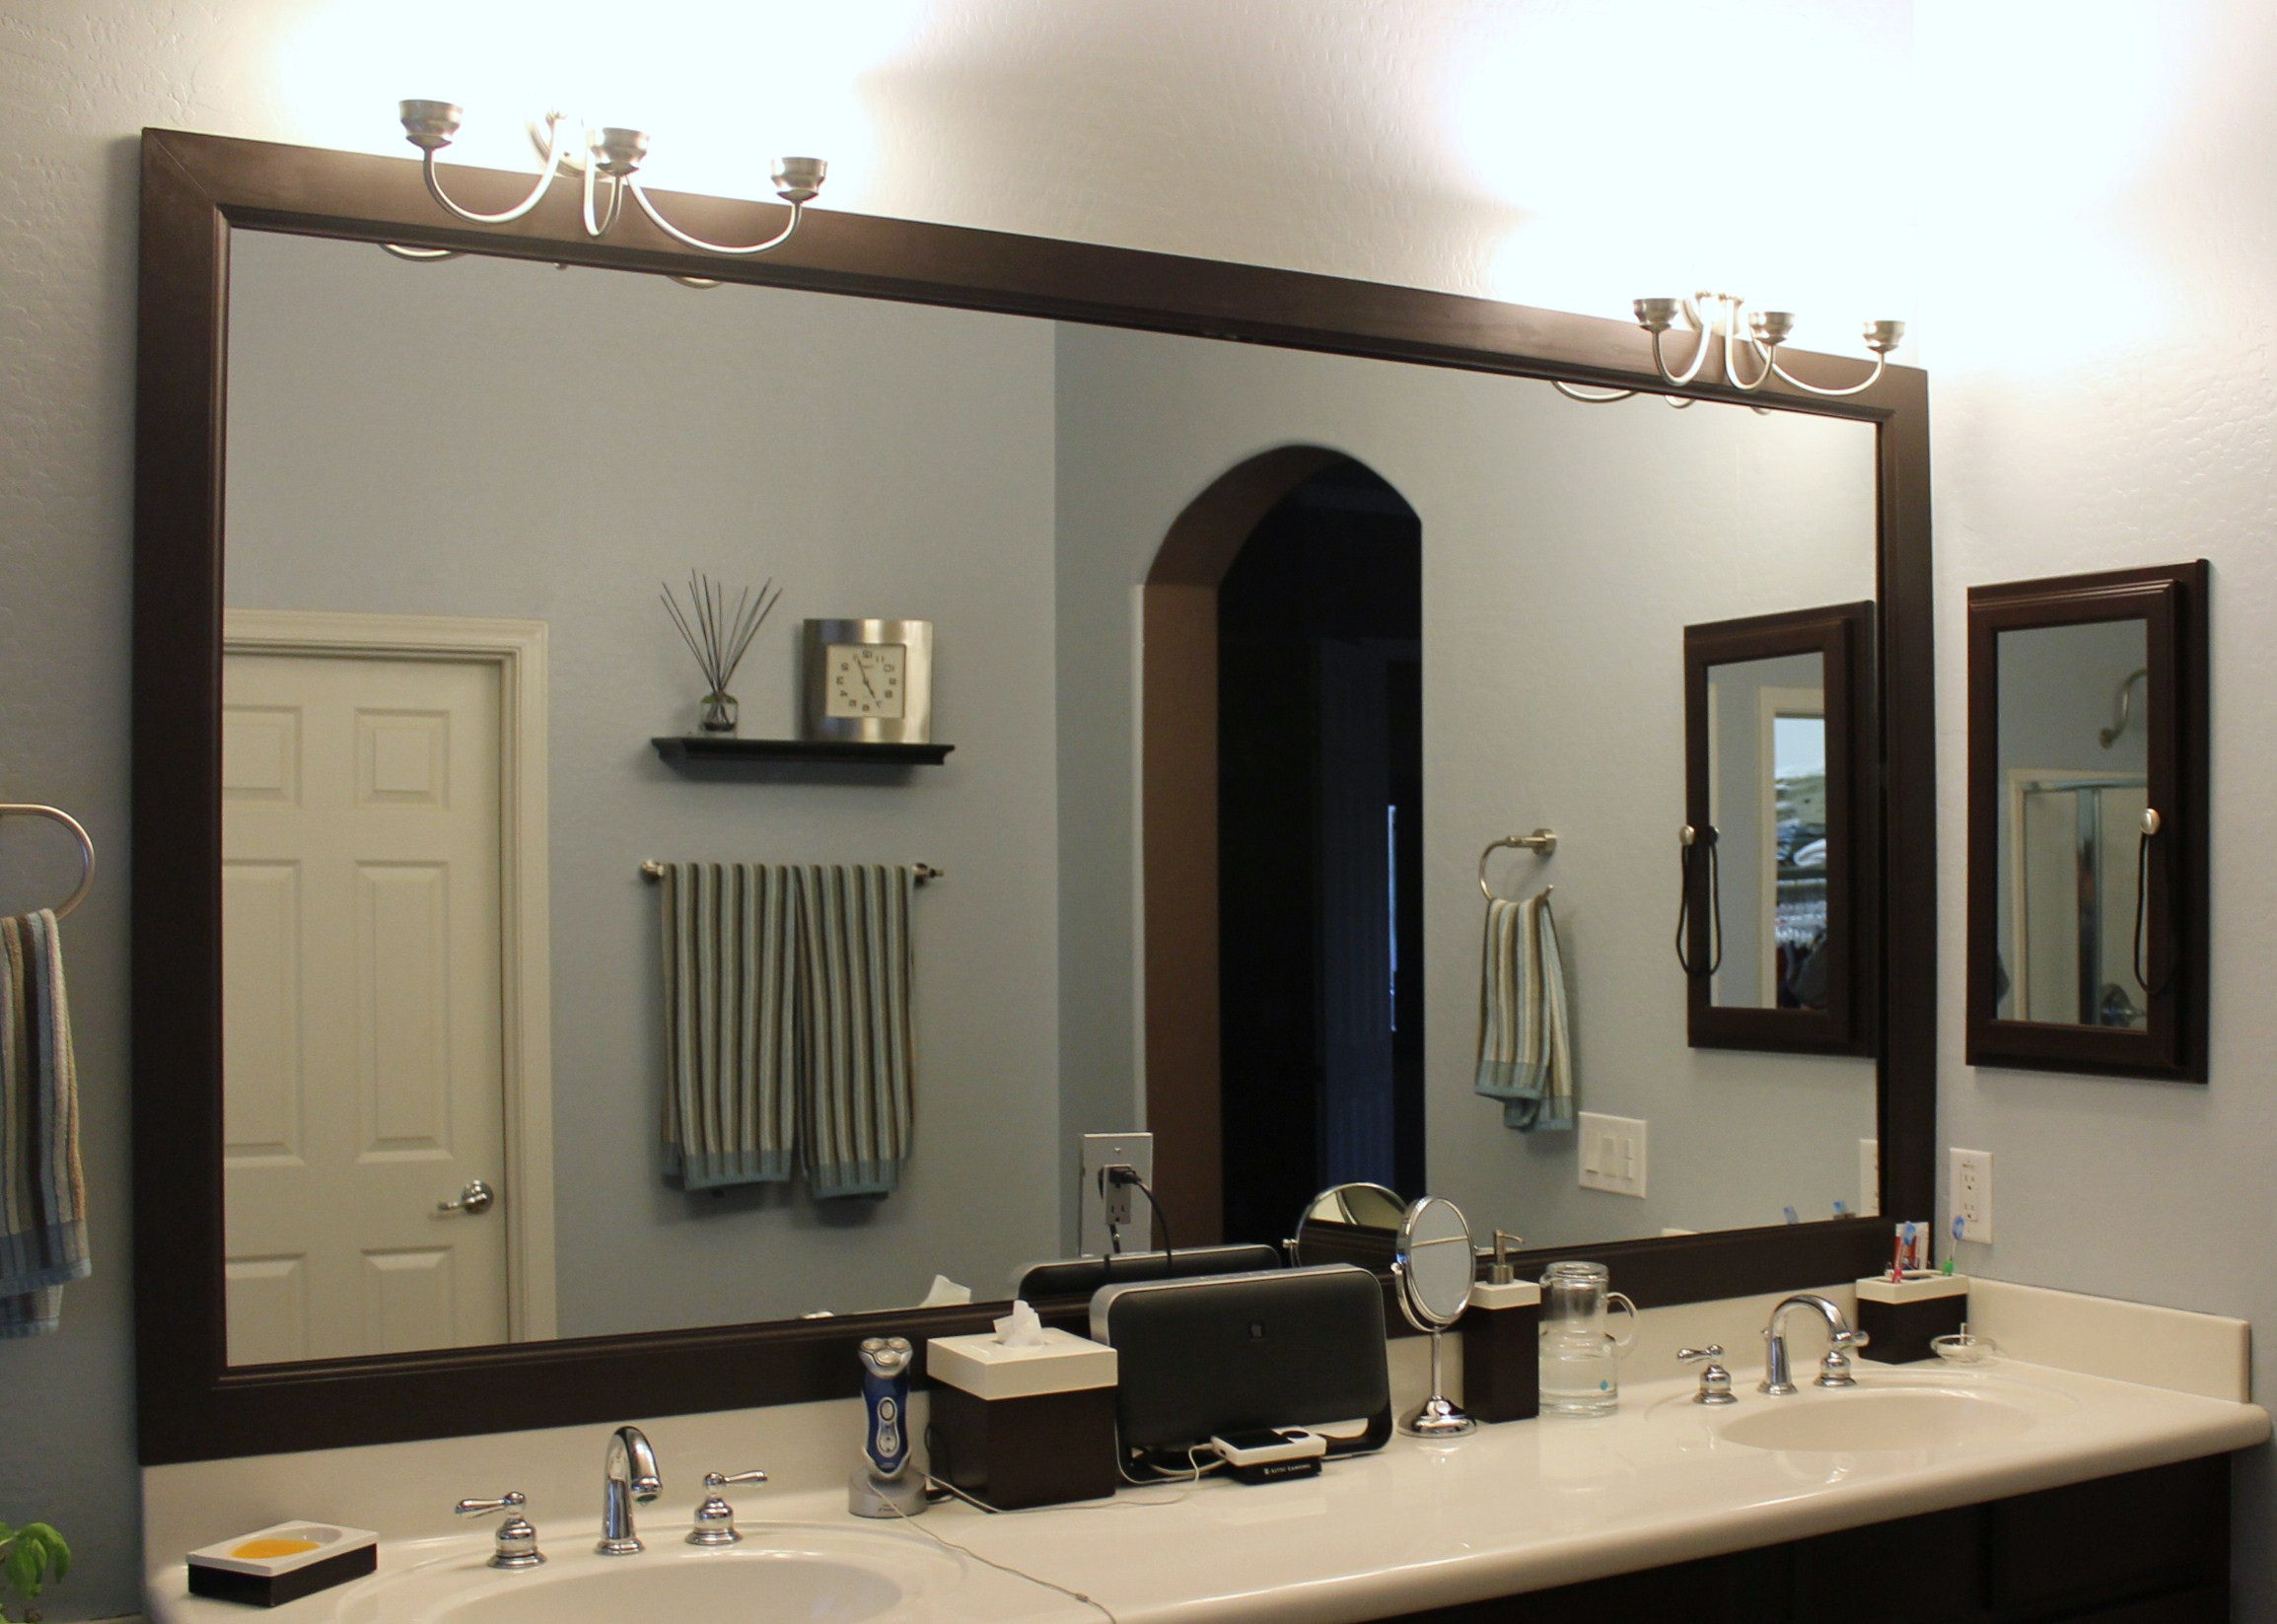 Large Framed Mirrors For Bathroom
 Bathroom Enchanting Framed Bathroom Mirrors